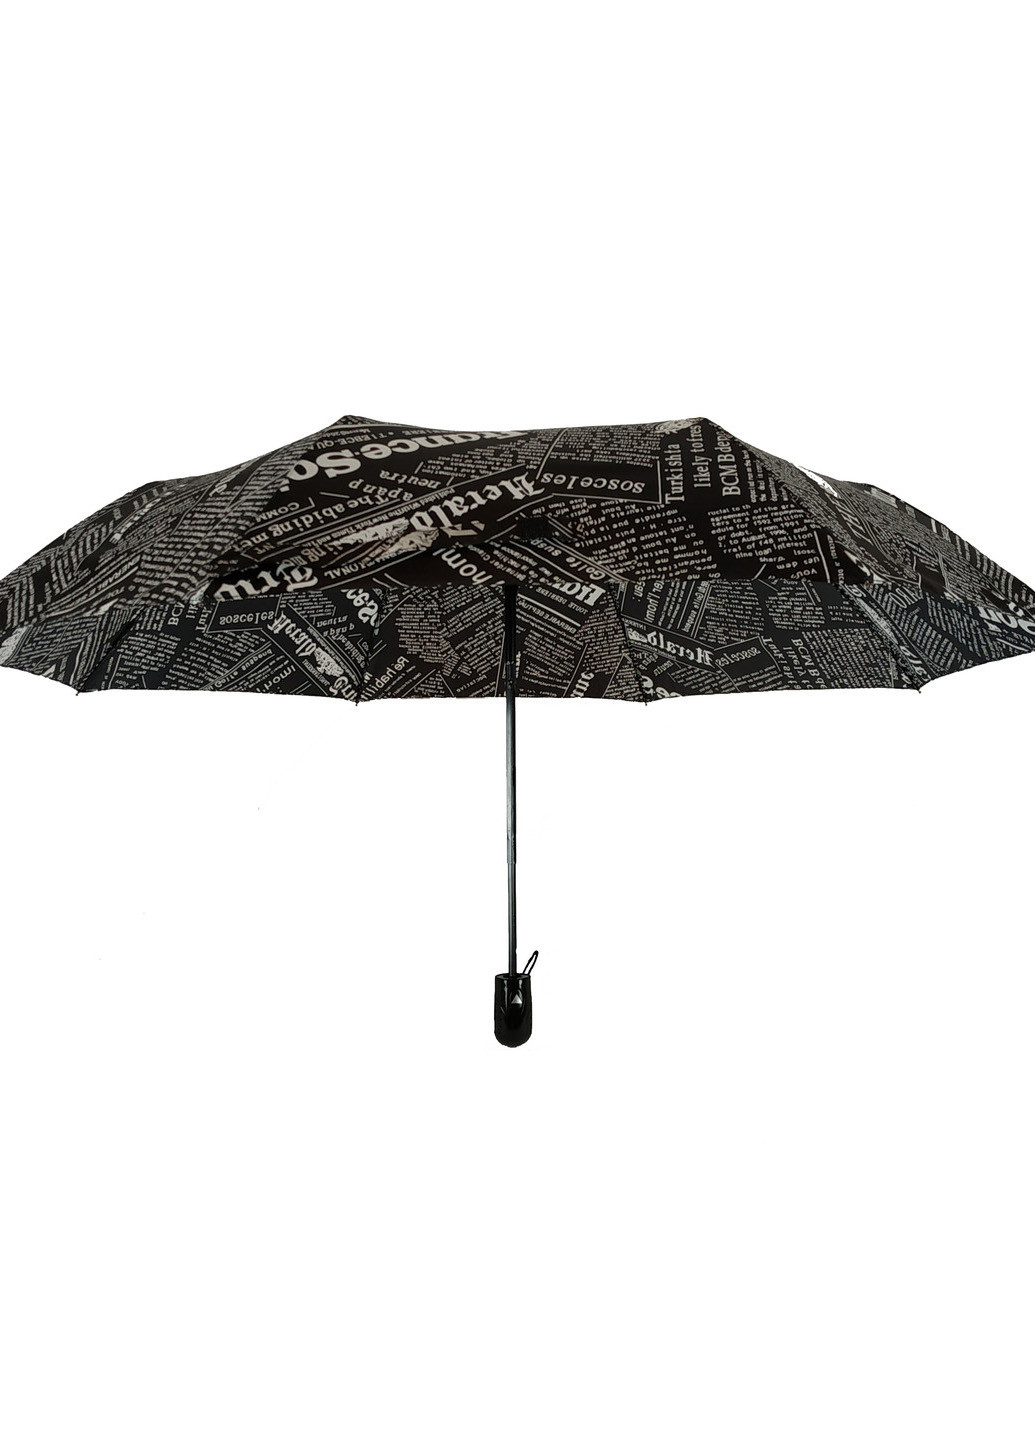 Женский зонт напівавтомат (2008) 97 см Max (189979124)